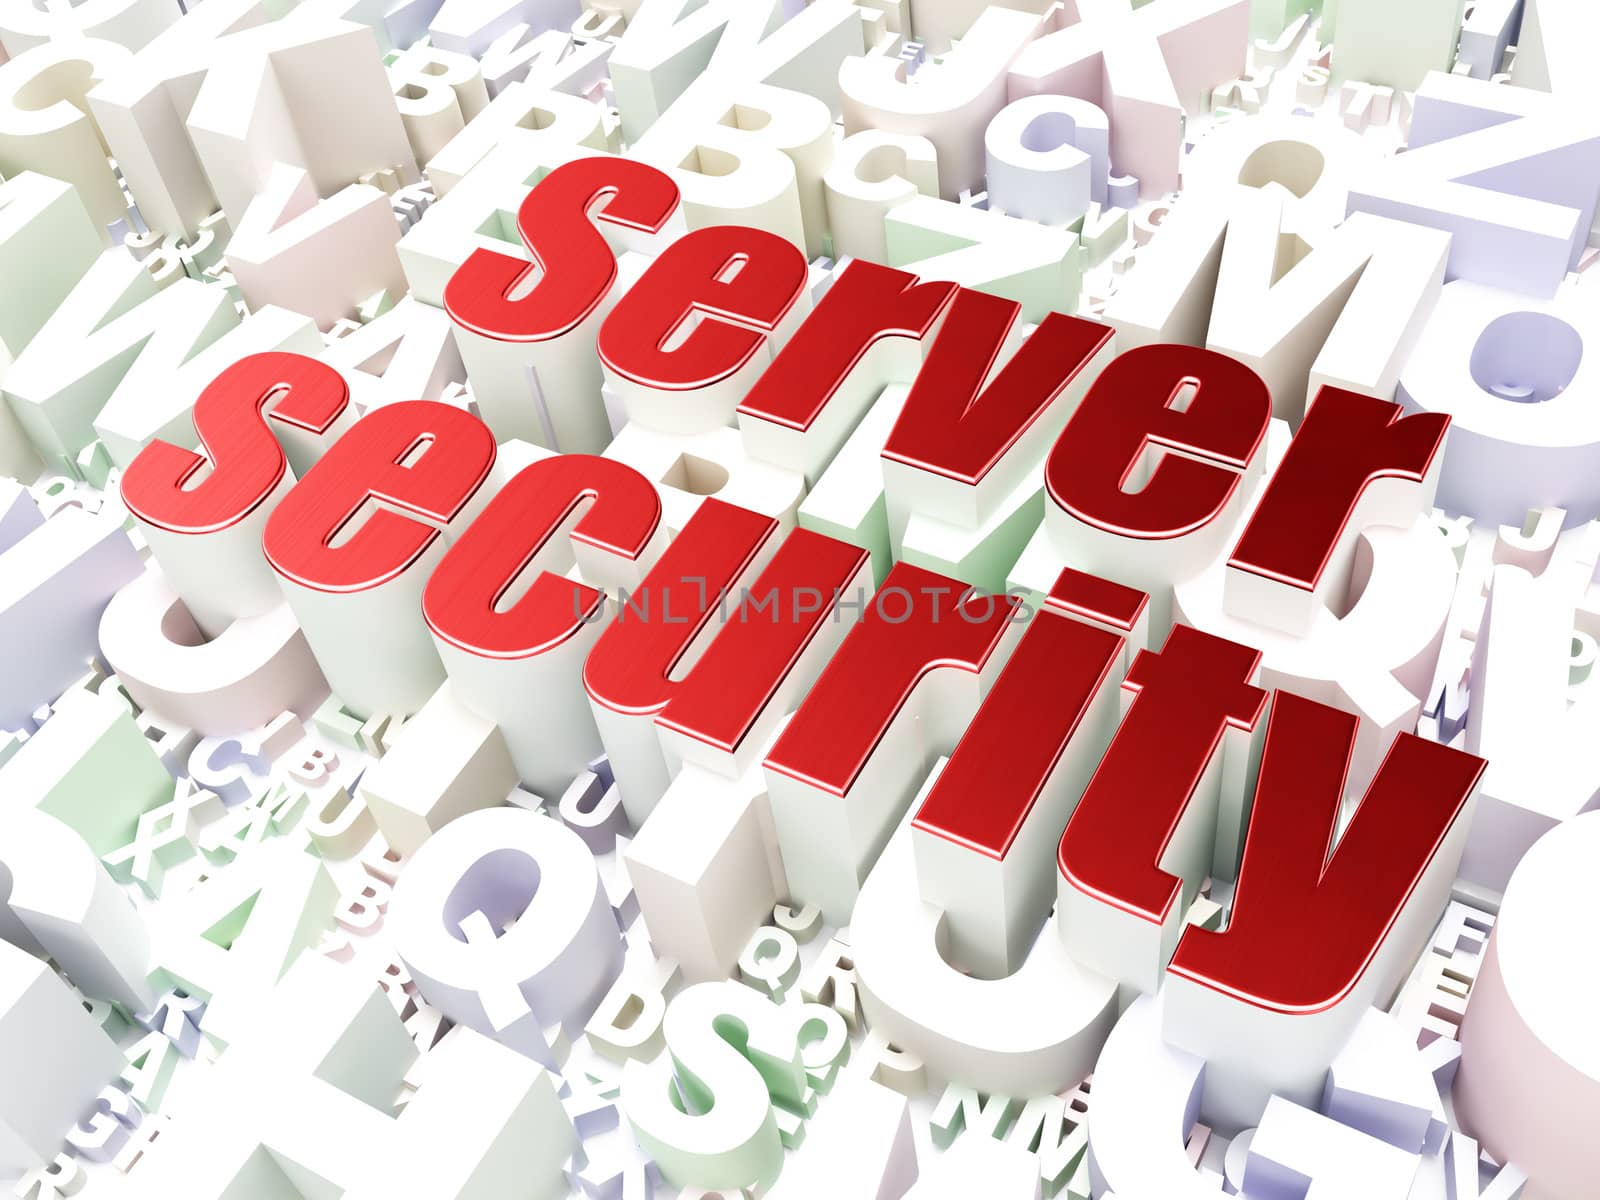 Security concept: Server Security on alphabet background by maxkabakov